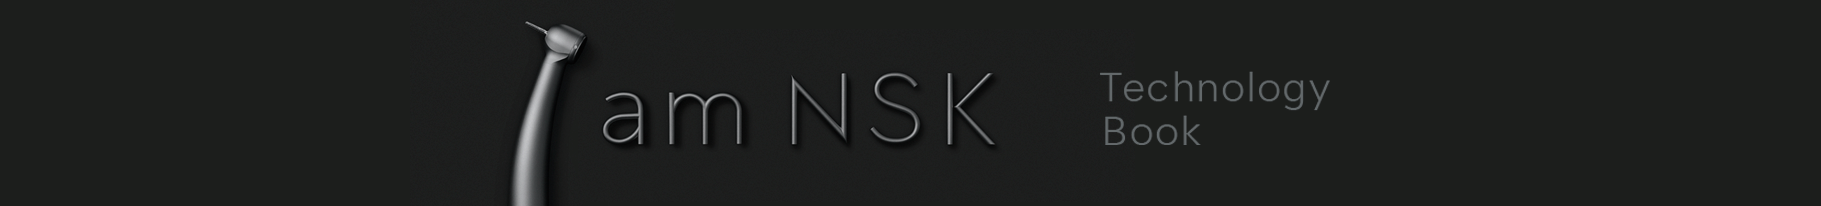 Technology Book - I am NSK